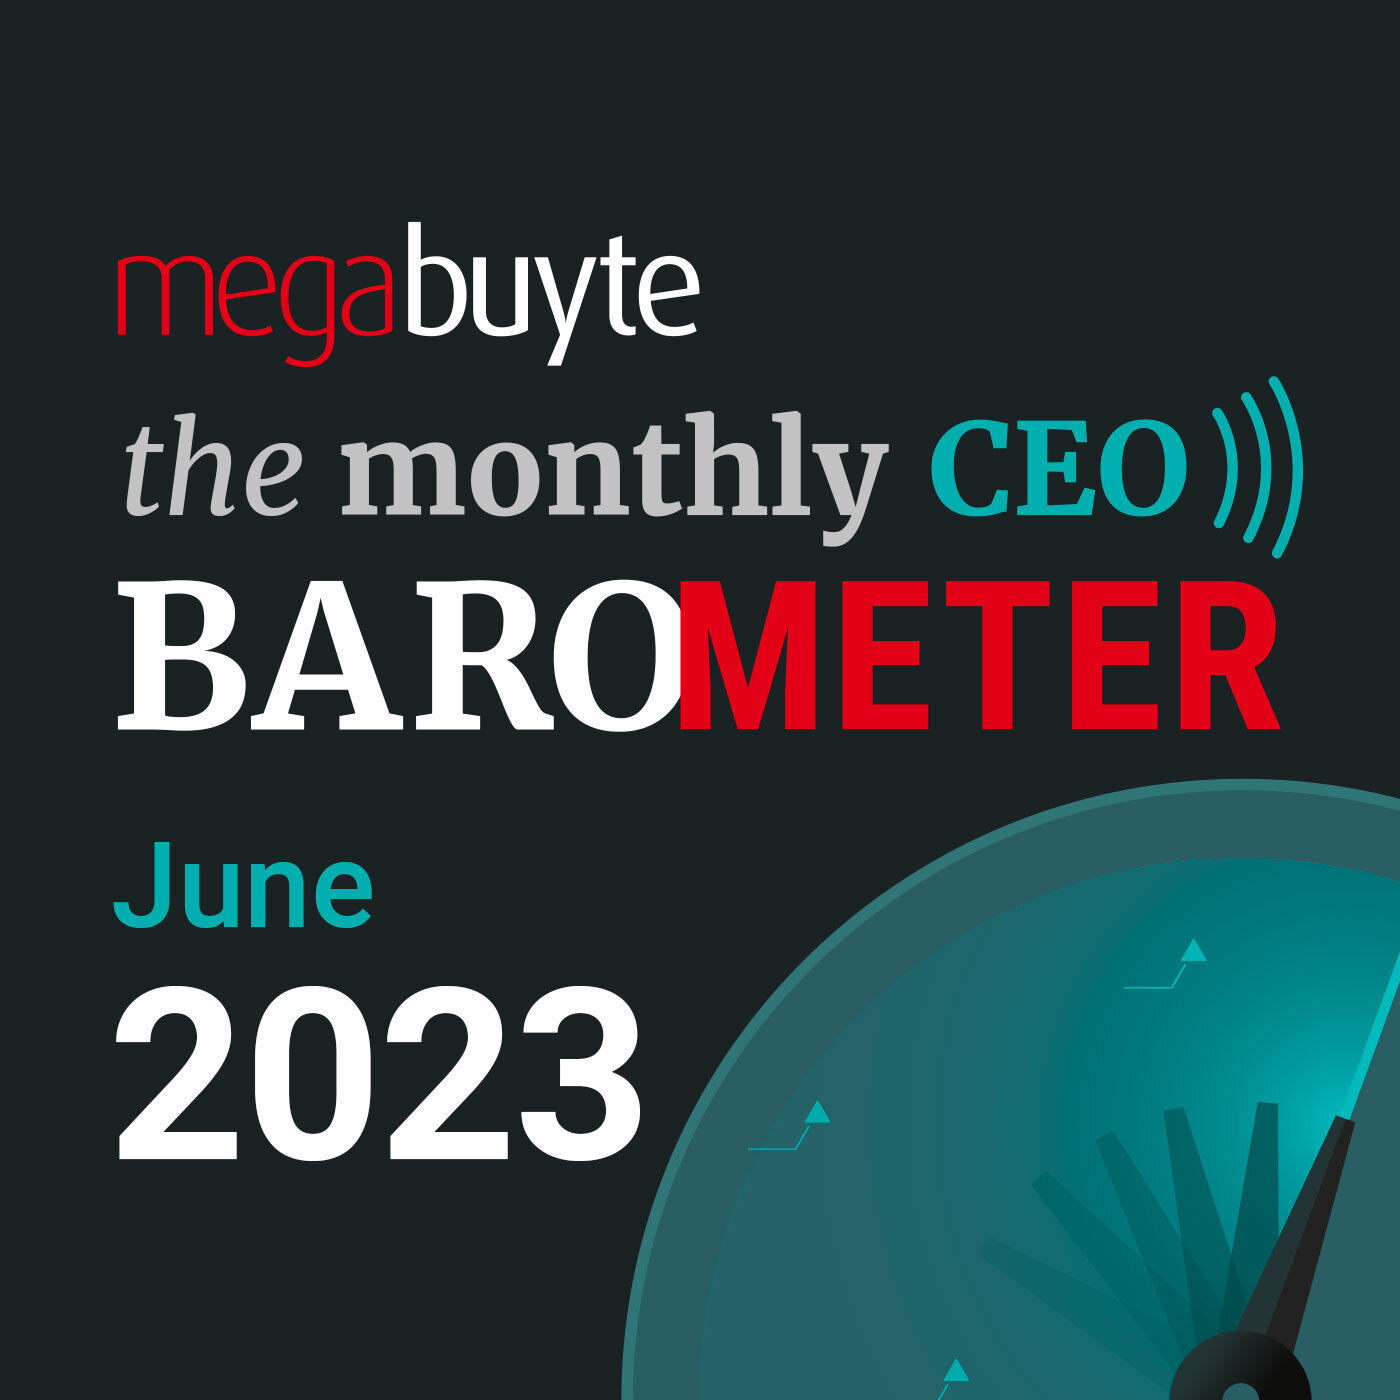 Megabuyte CEOBarometer - November 2022 update